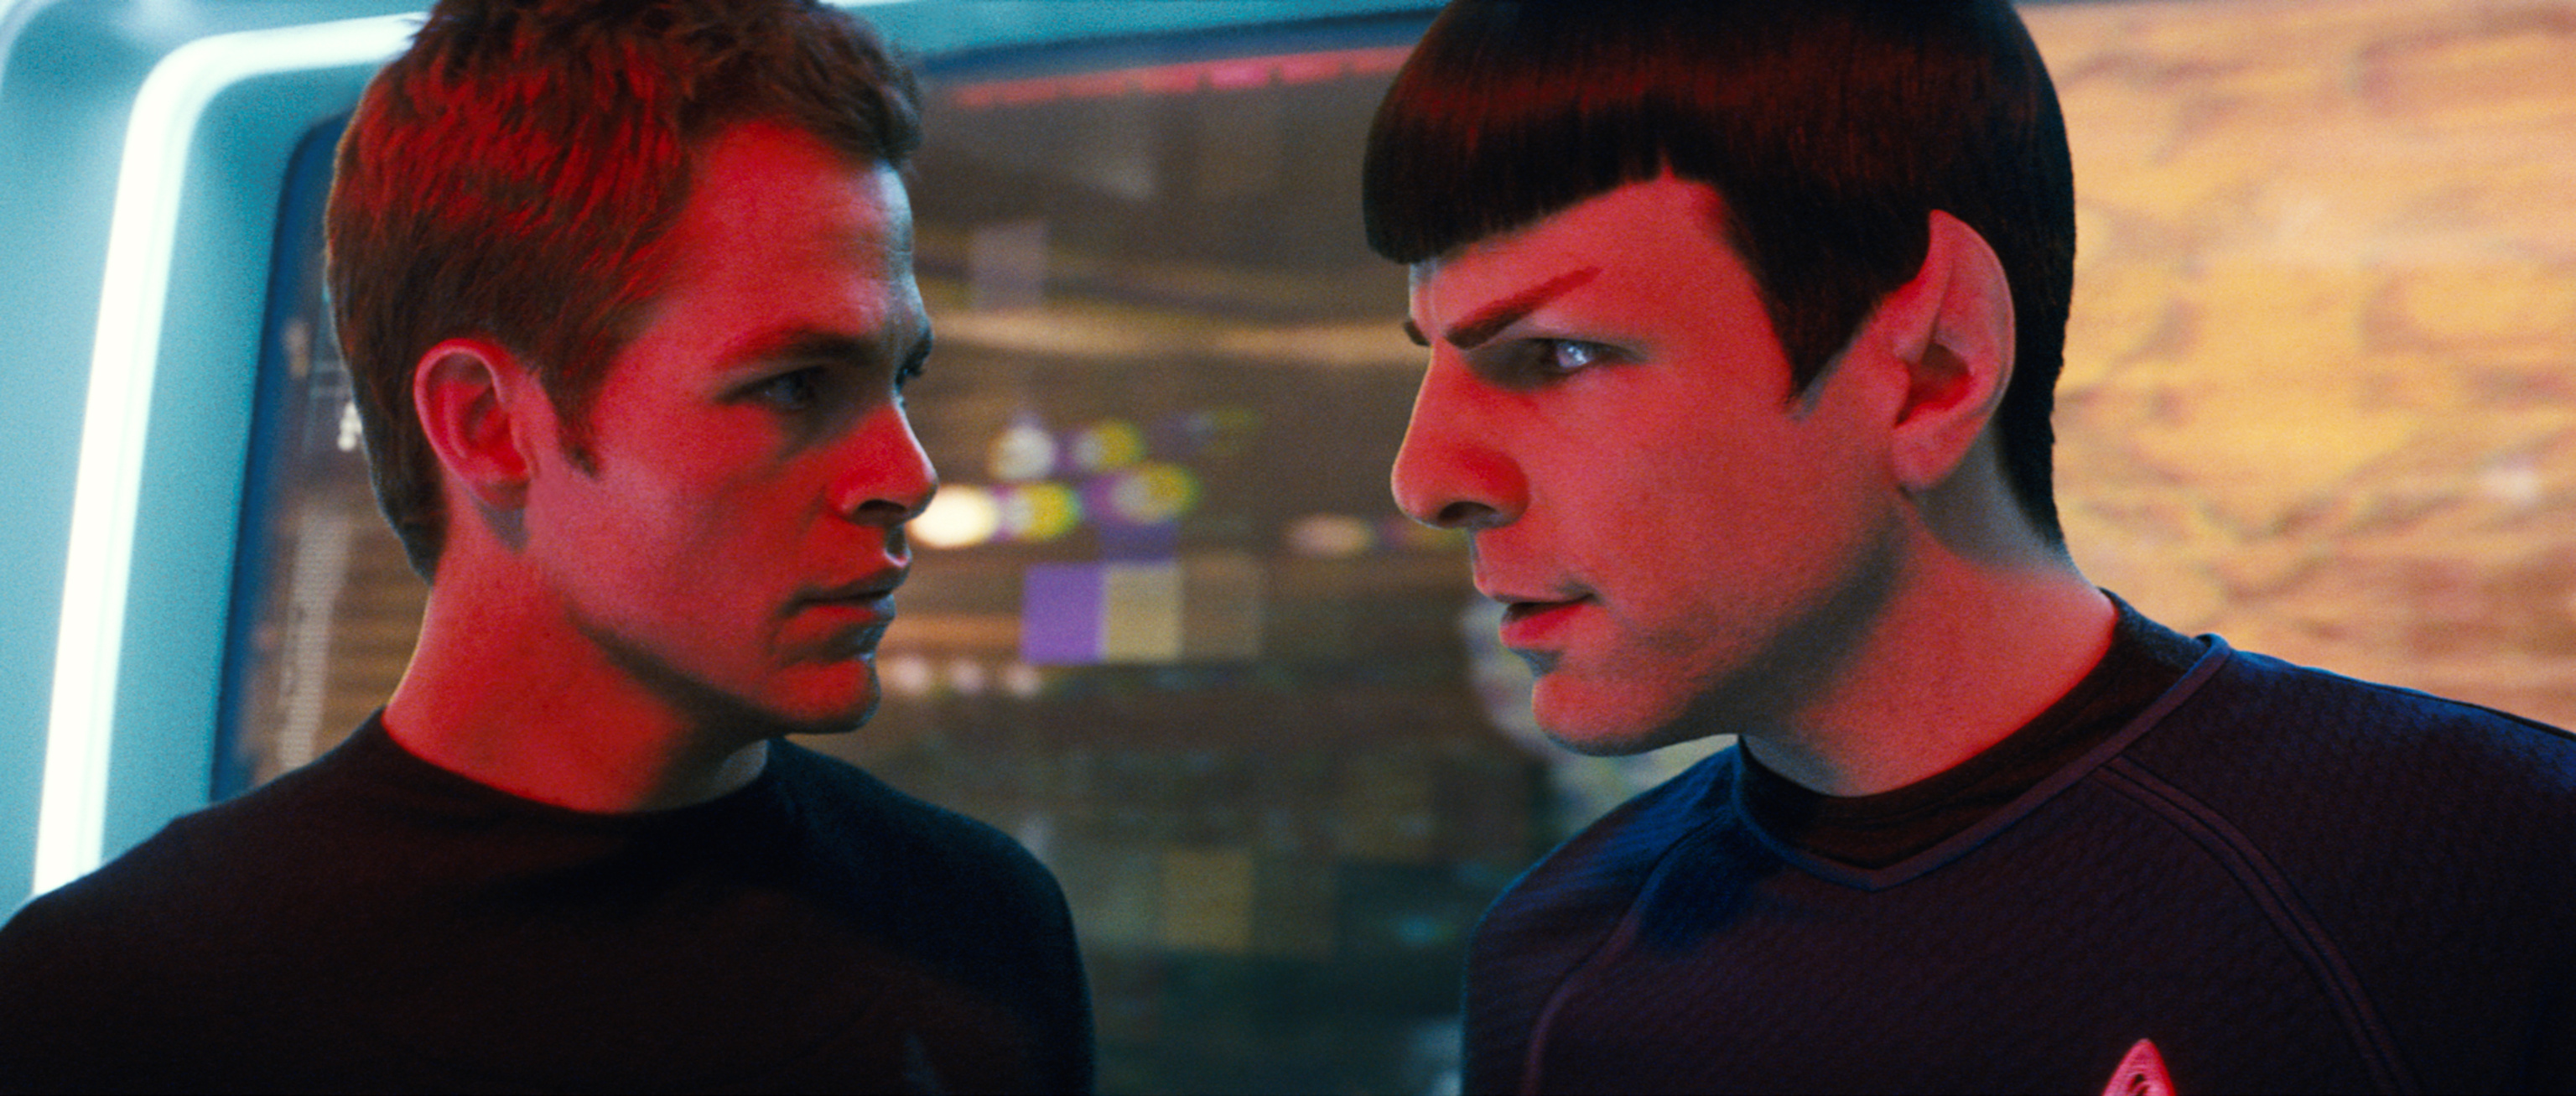 Zachary Quinto as Spock, Star Trek, Intergalactic adventure, Science fiction, 3080x1310 Dual Screen Desktop